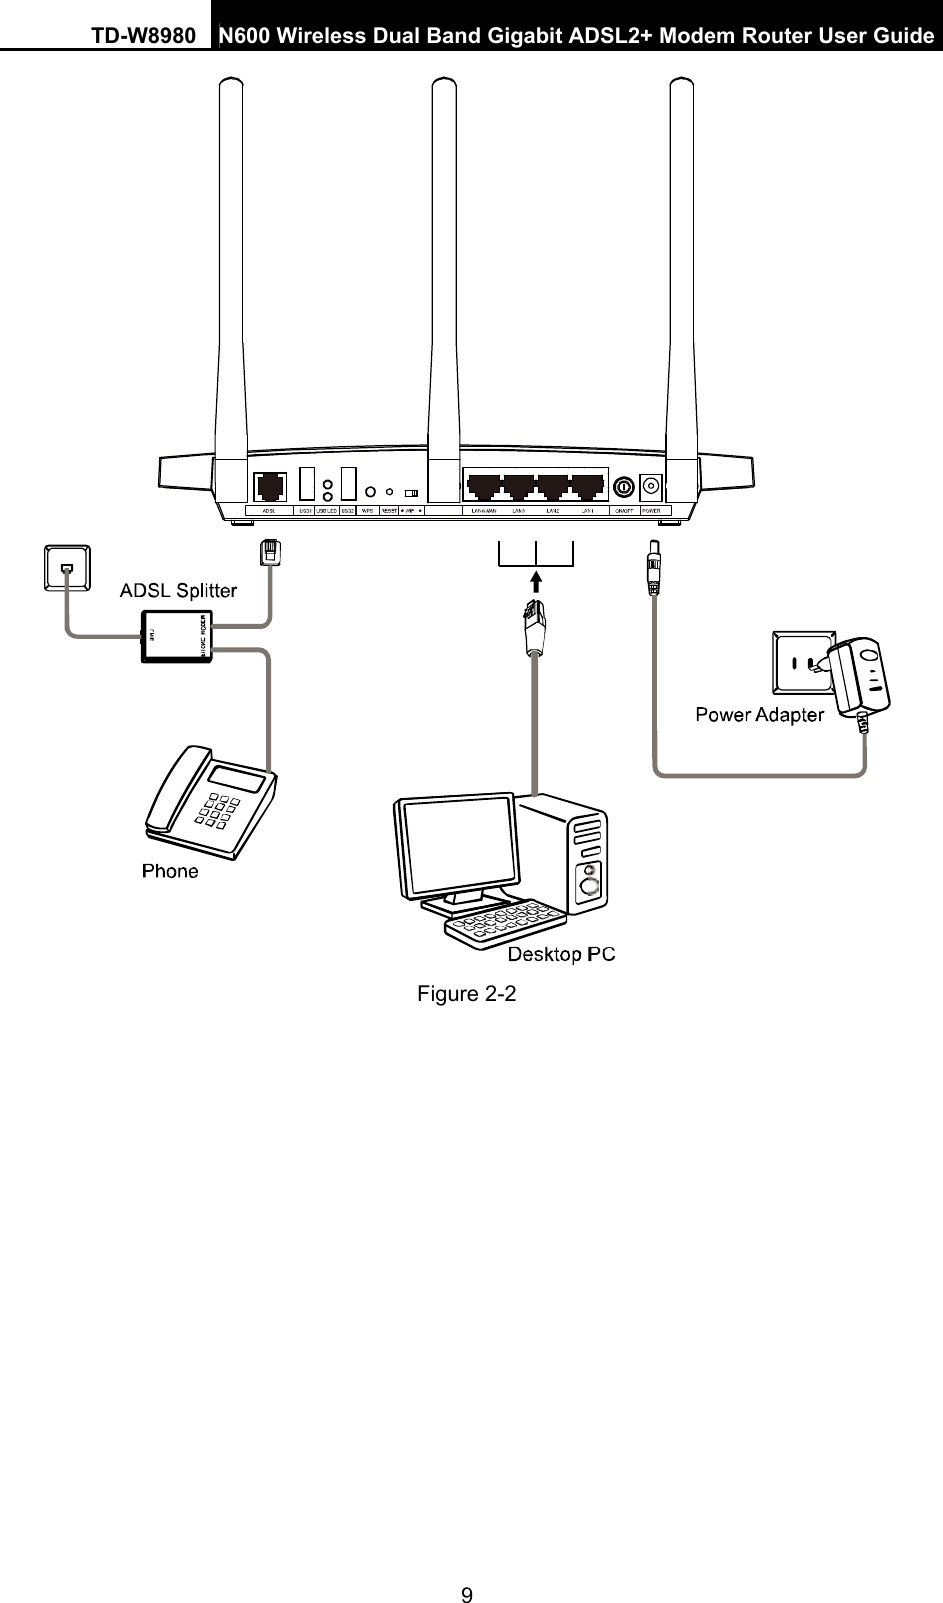 TD-W8980  N600 Wireless Dual Band Gigabit ADSL2+ Modem Router User Guide 9  Figure 2-2 